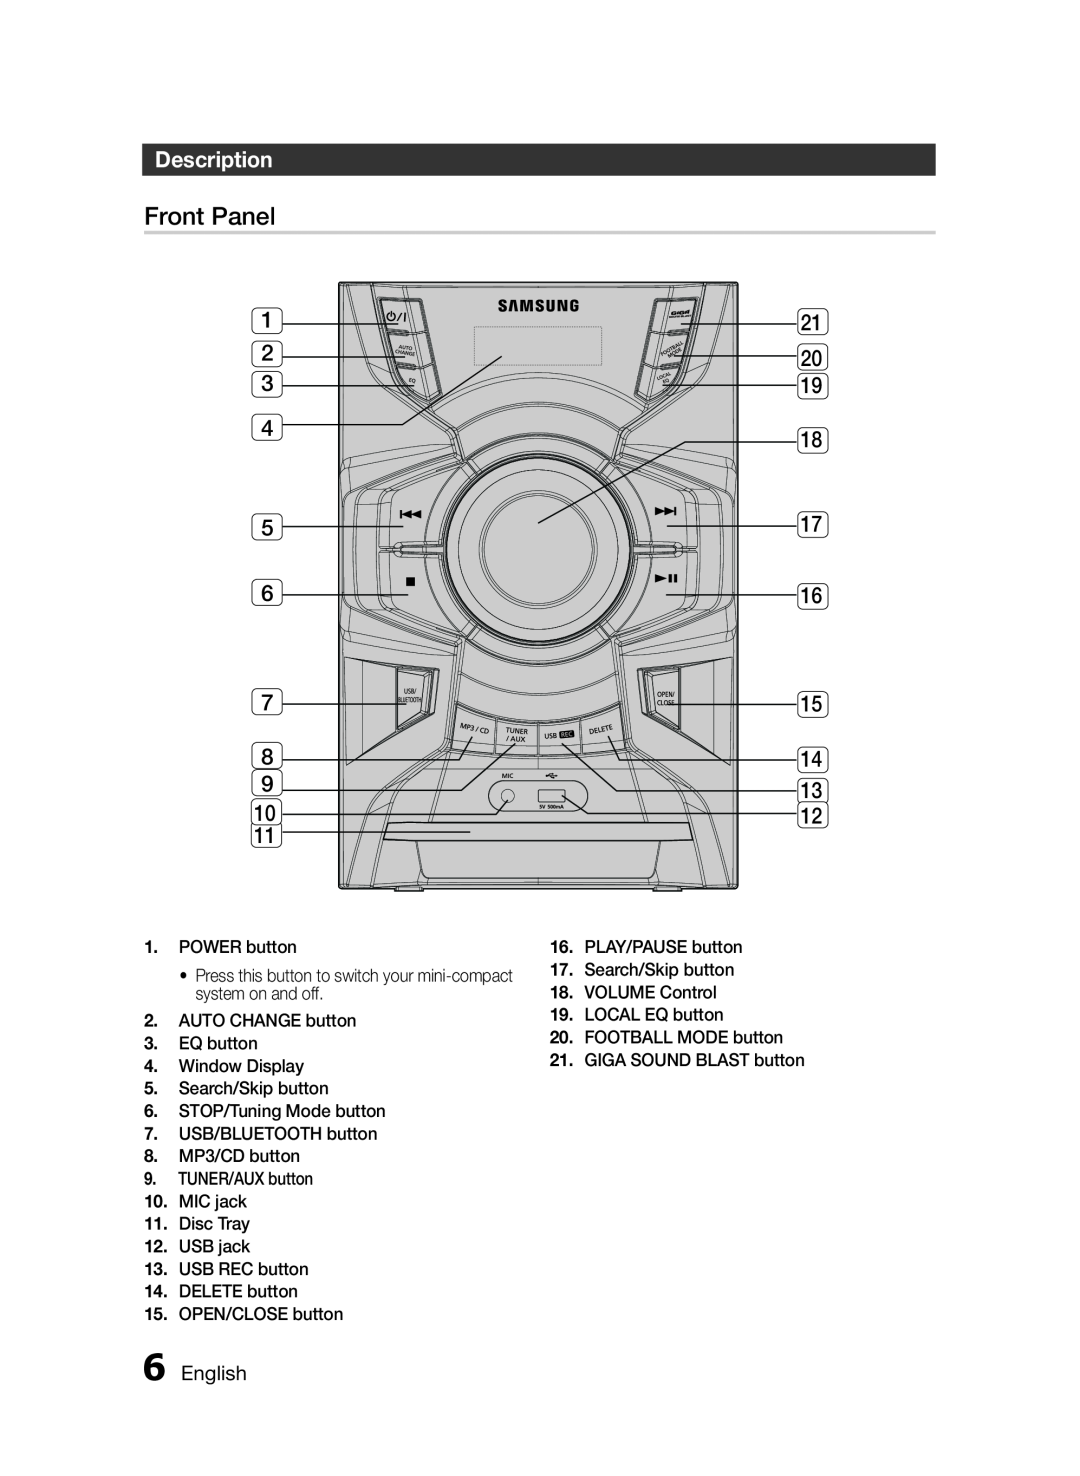 Samsung MXF630BZA user manual Front Panel, Description, 1 2 3, 21 20, English 